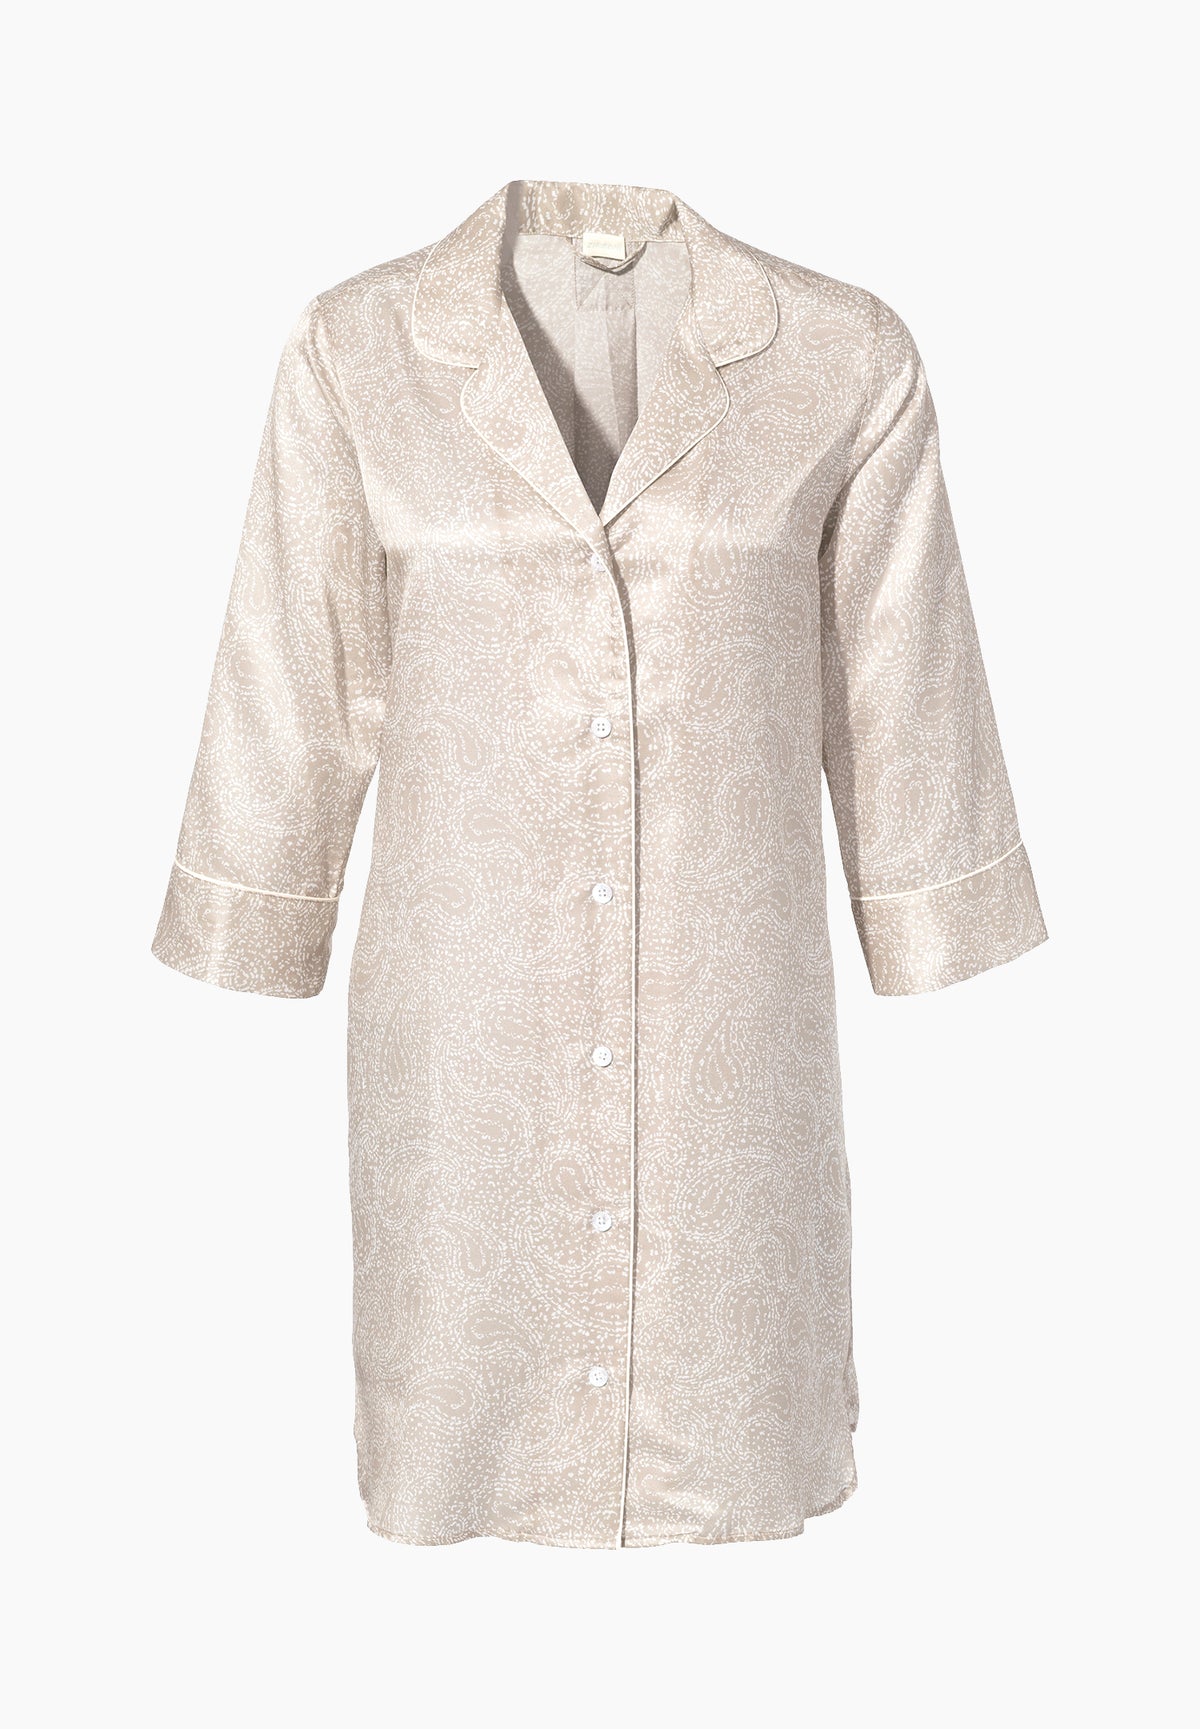 Cotton/Silk Print | Sleepshirt 3/4 Sleeve - paisley sand